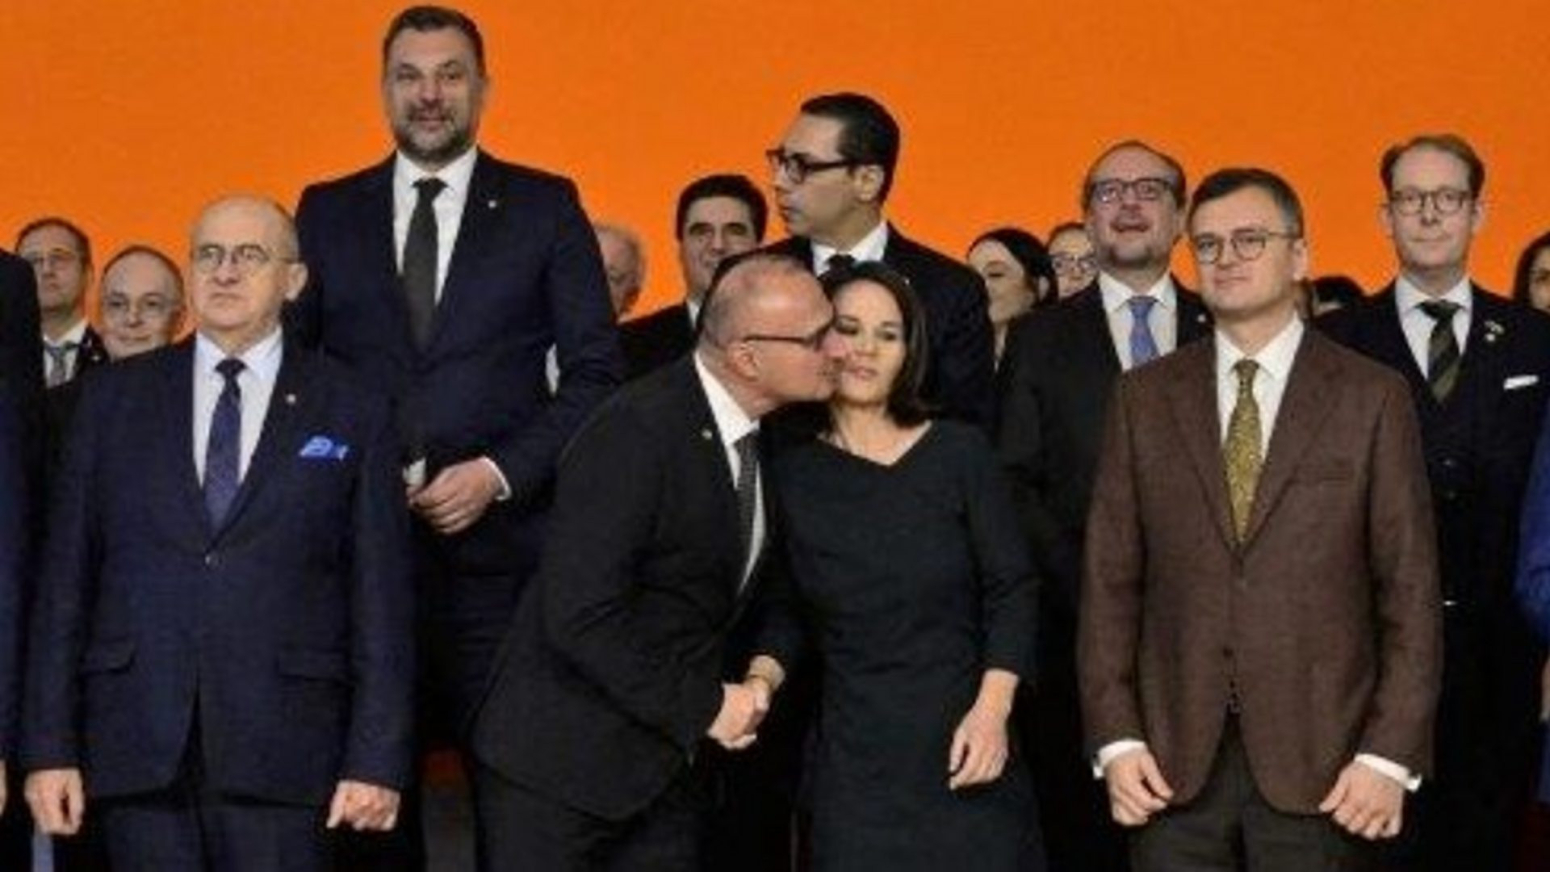 Awkward EU summit kiss causes controversy